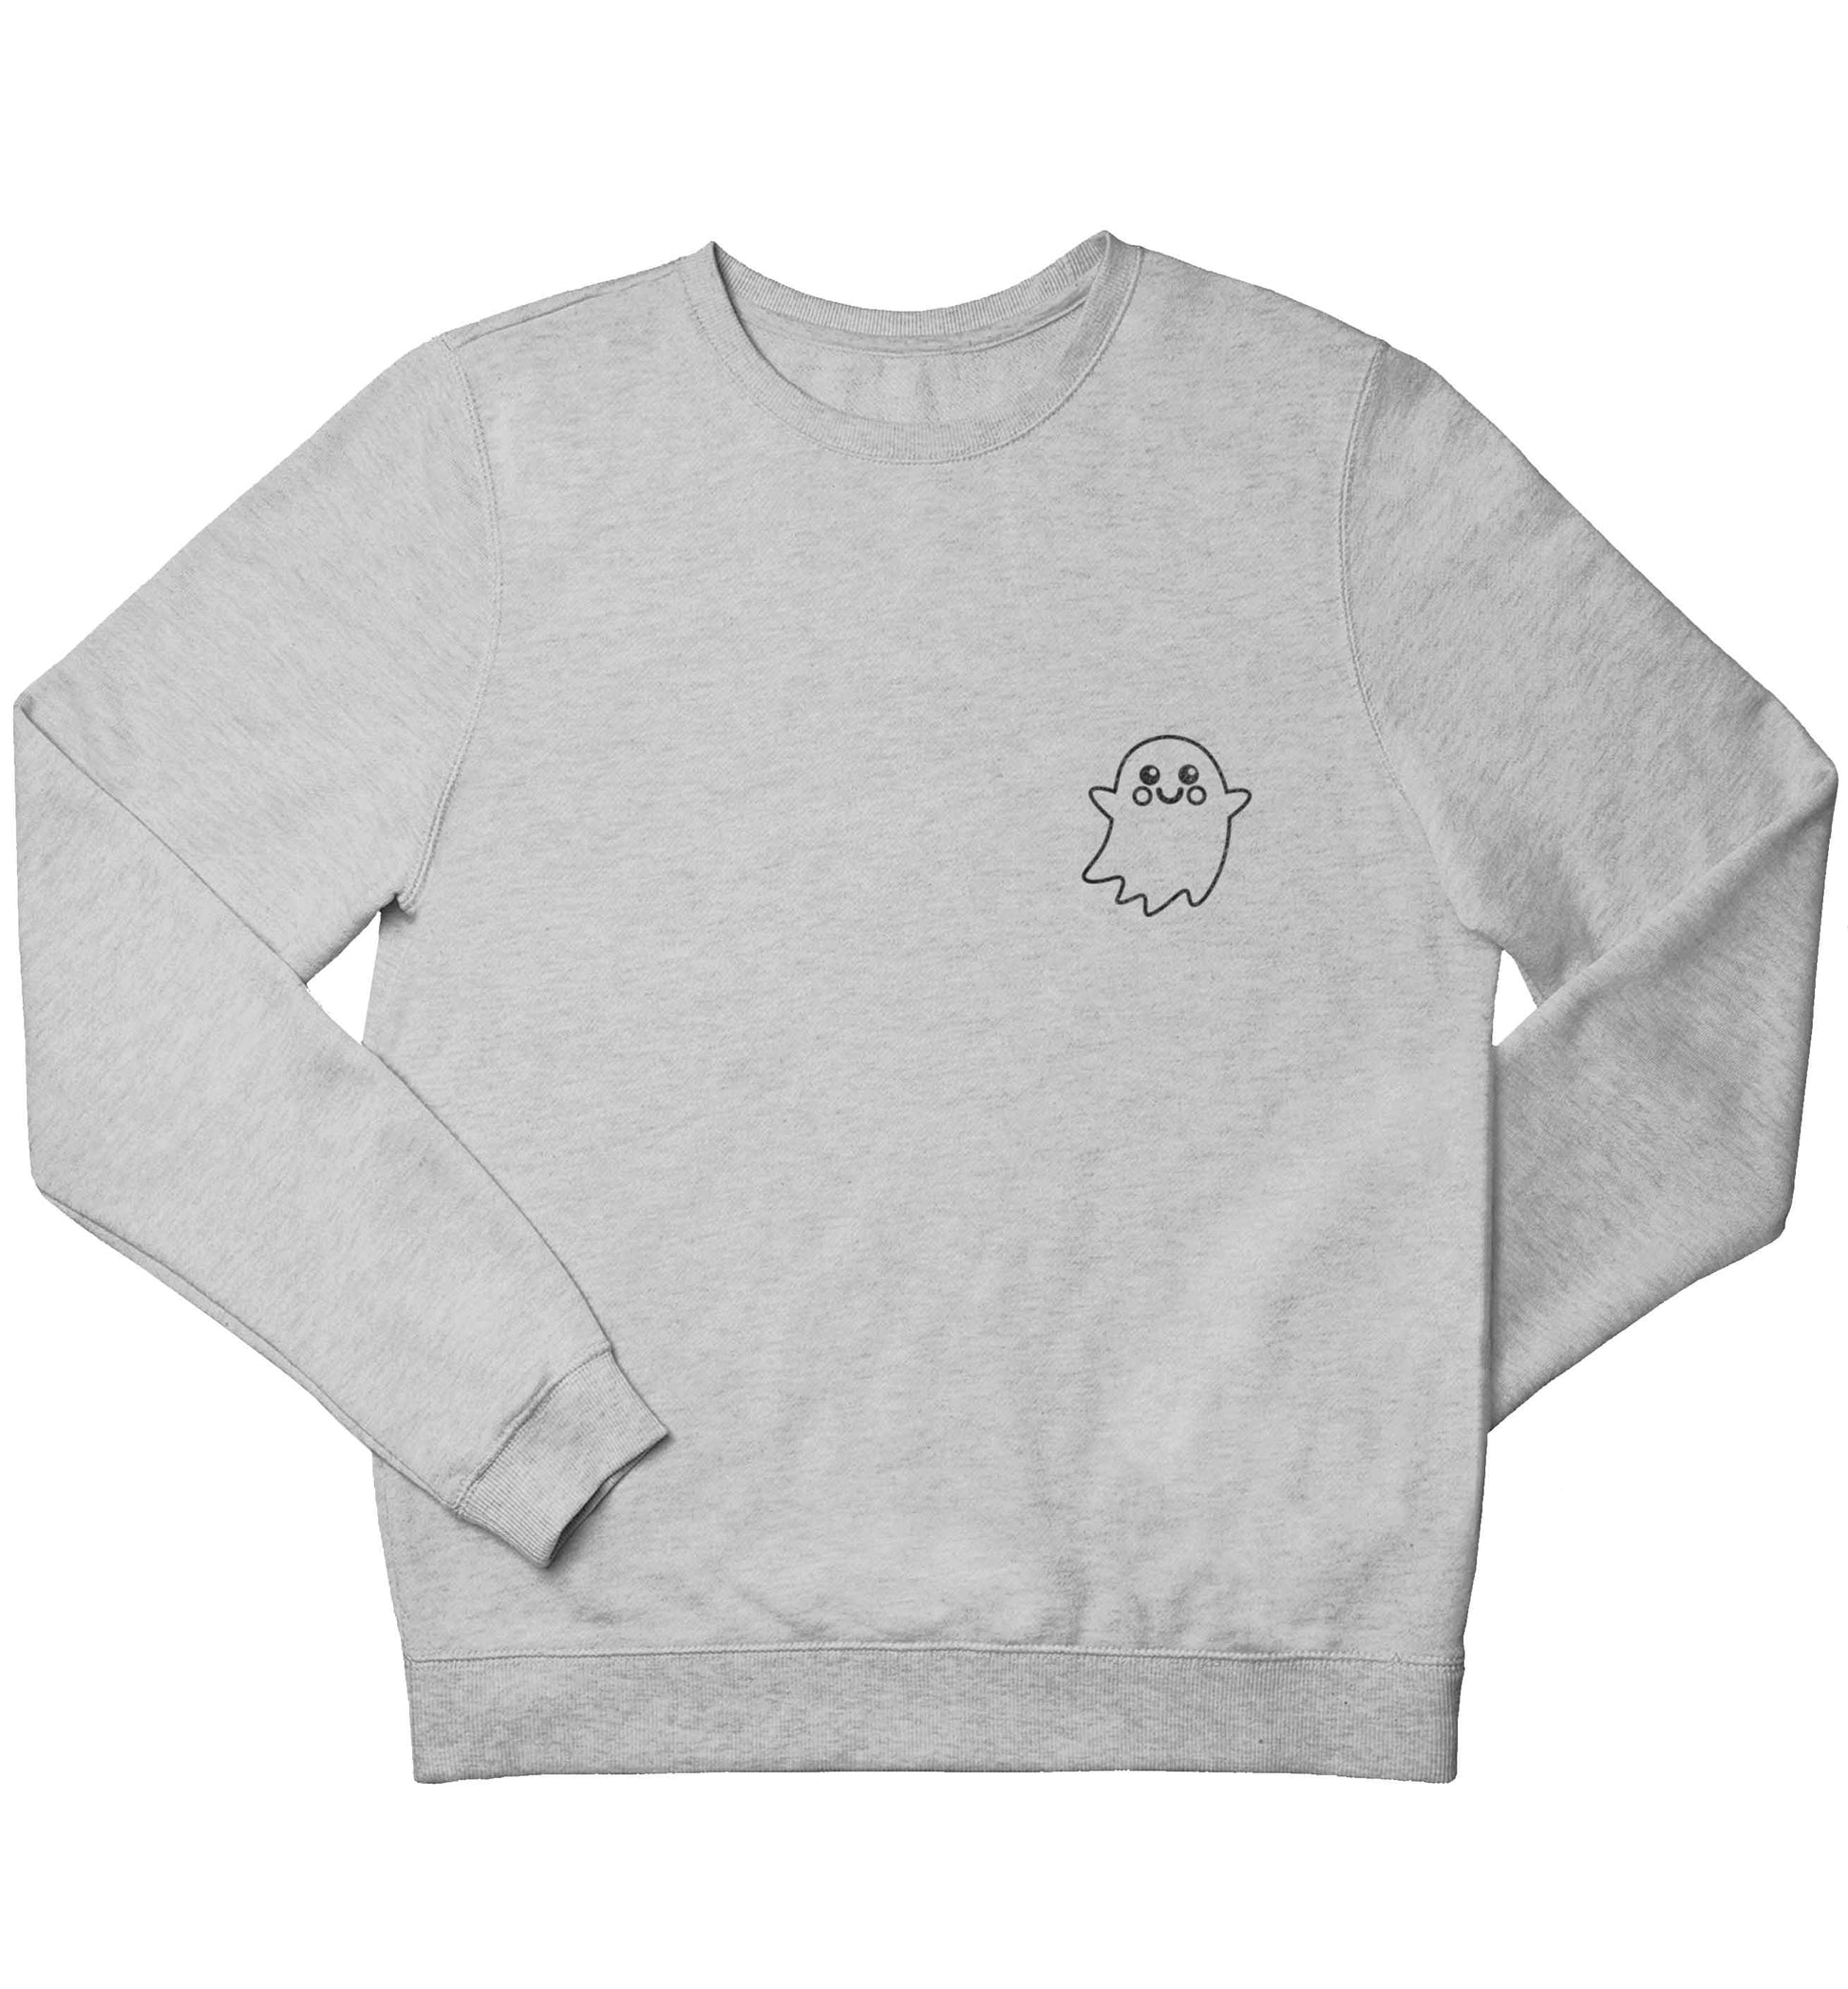 Pocket ghost children's grey sweater 12-13 Years